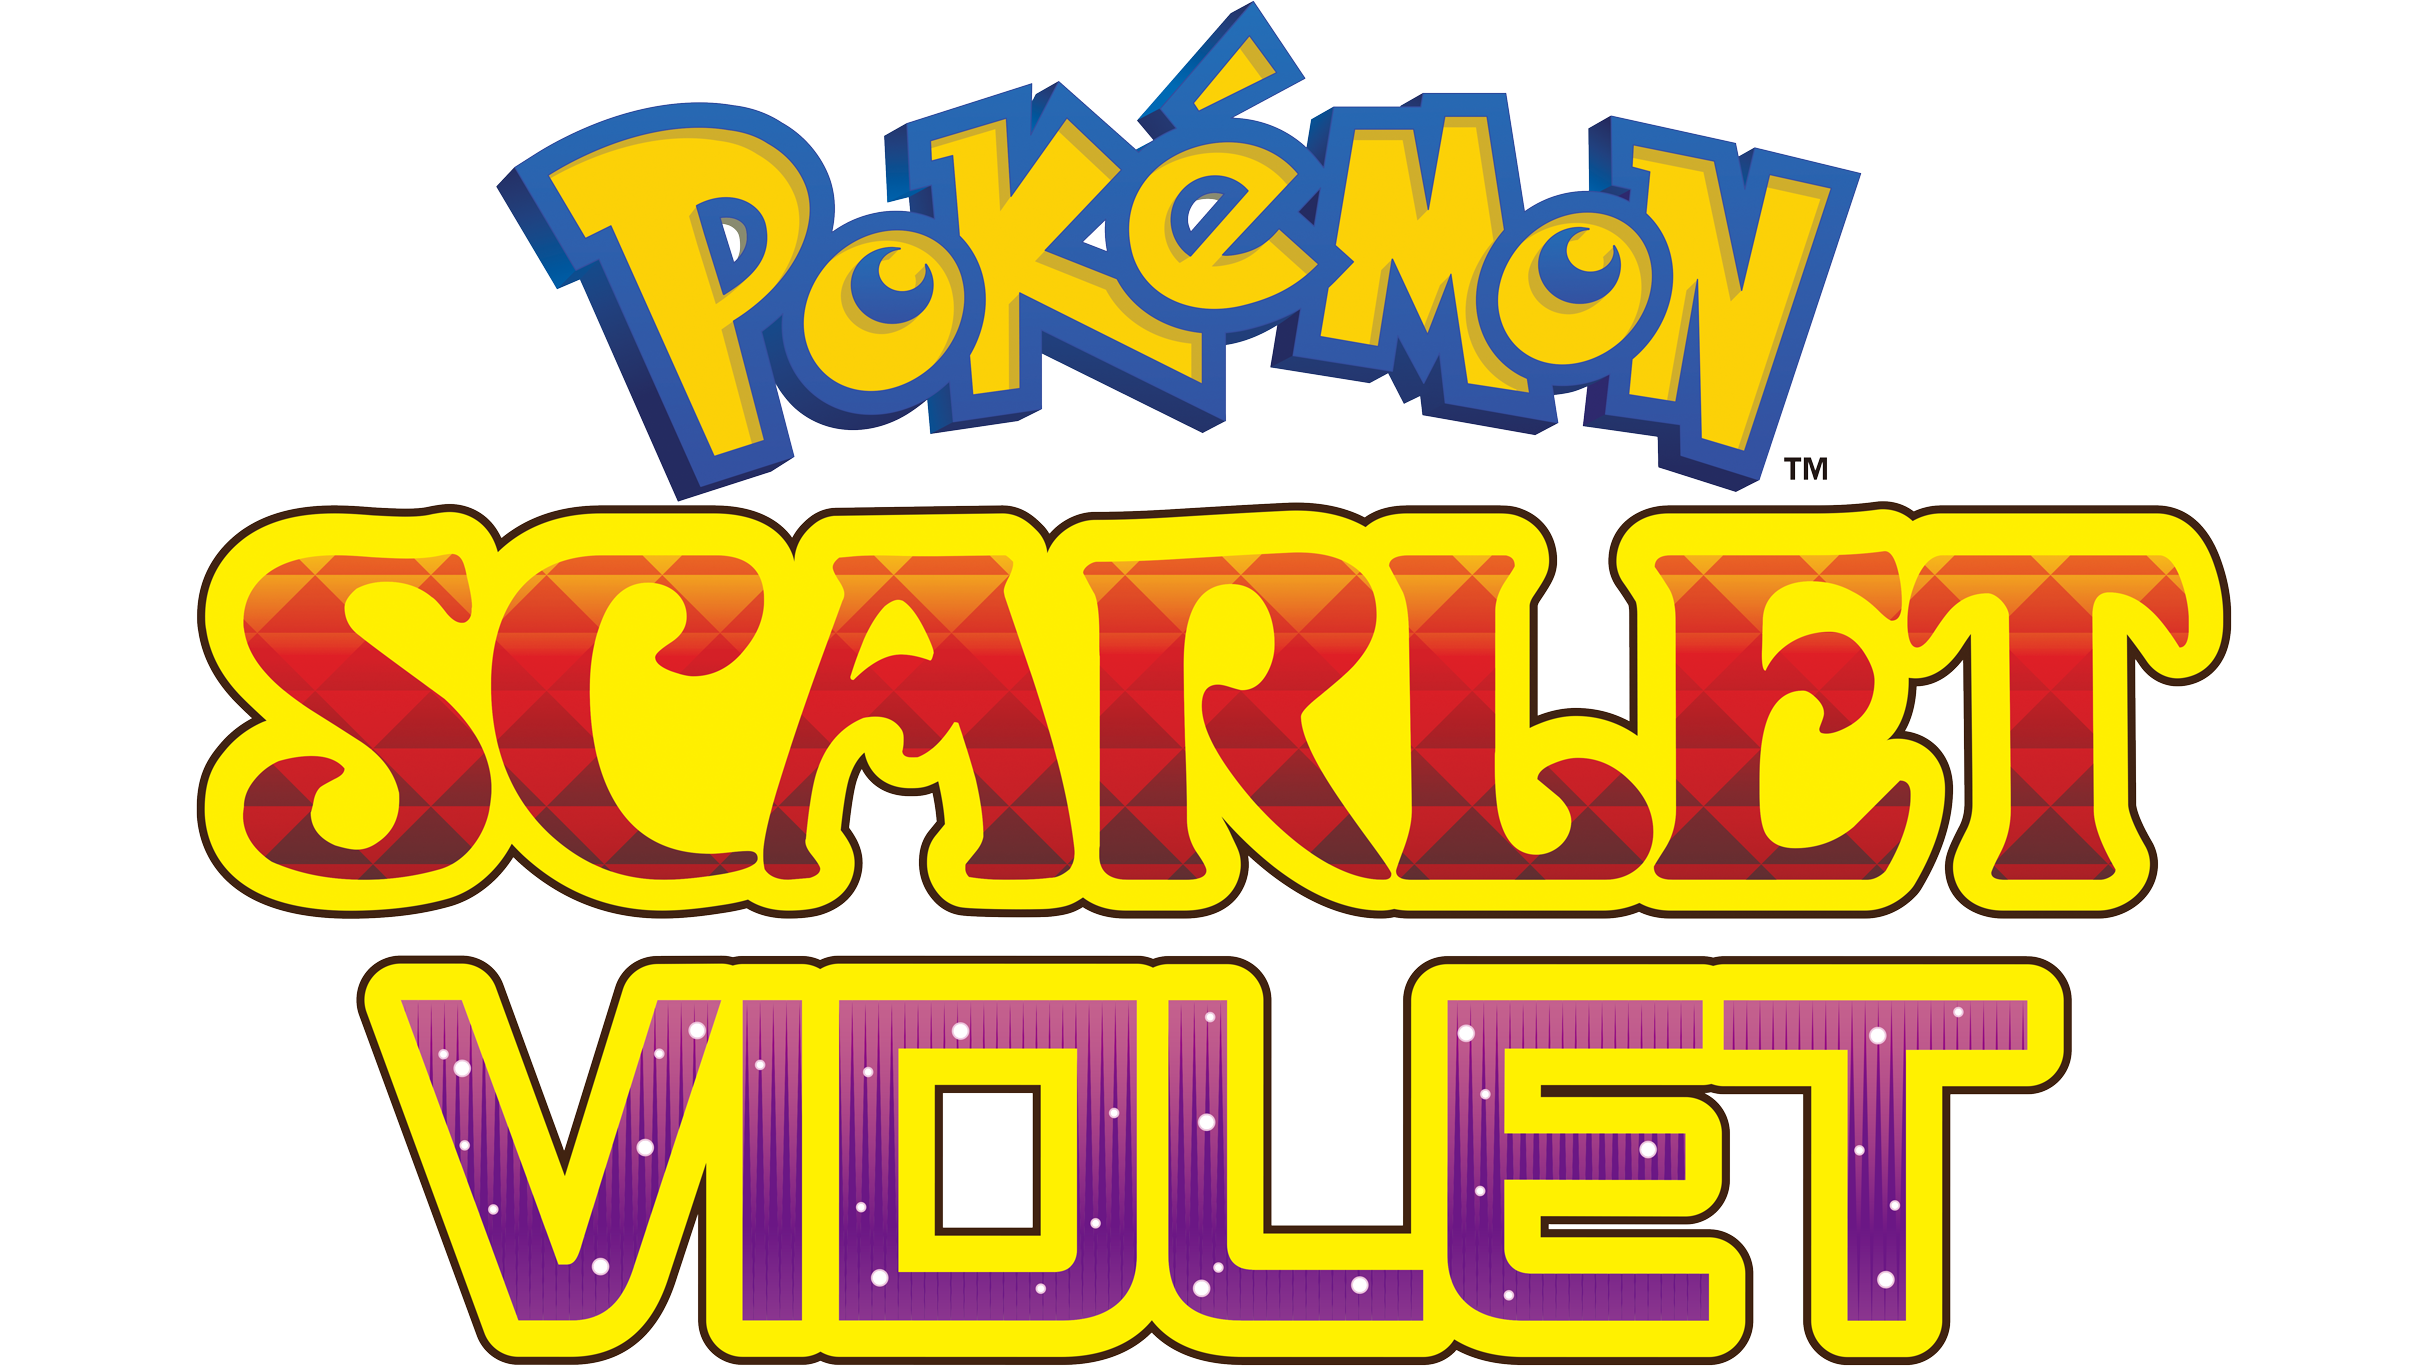 Pokémon Scarlet and Violet Guide 